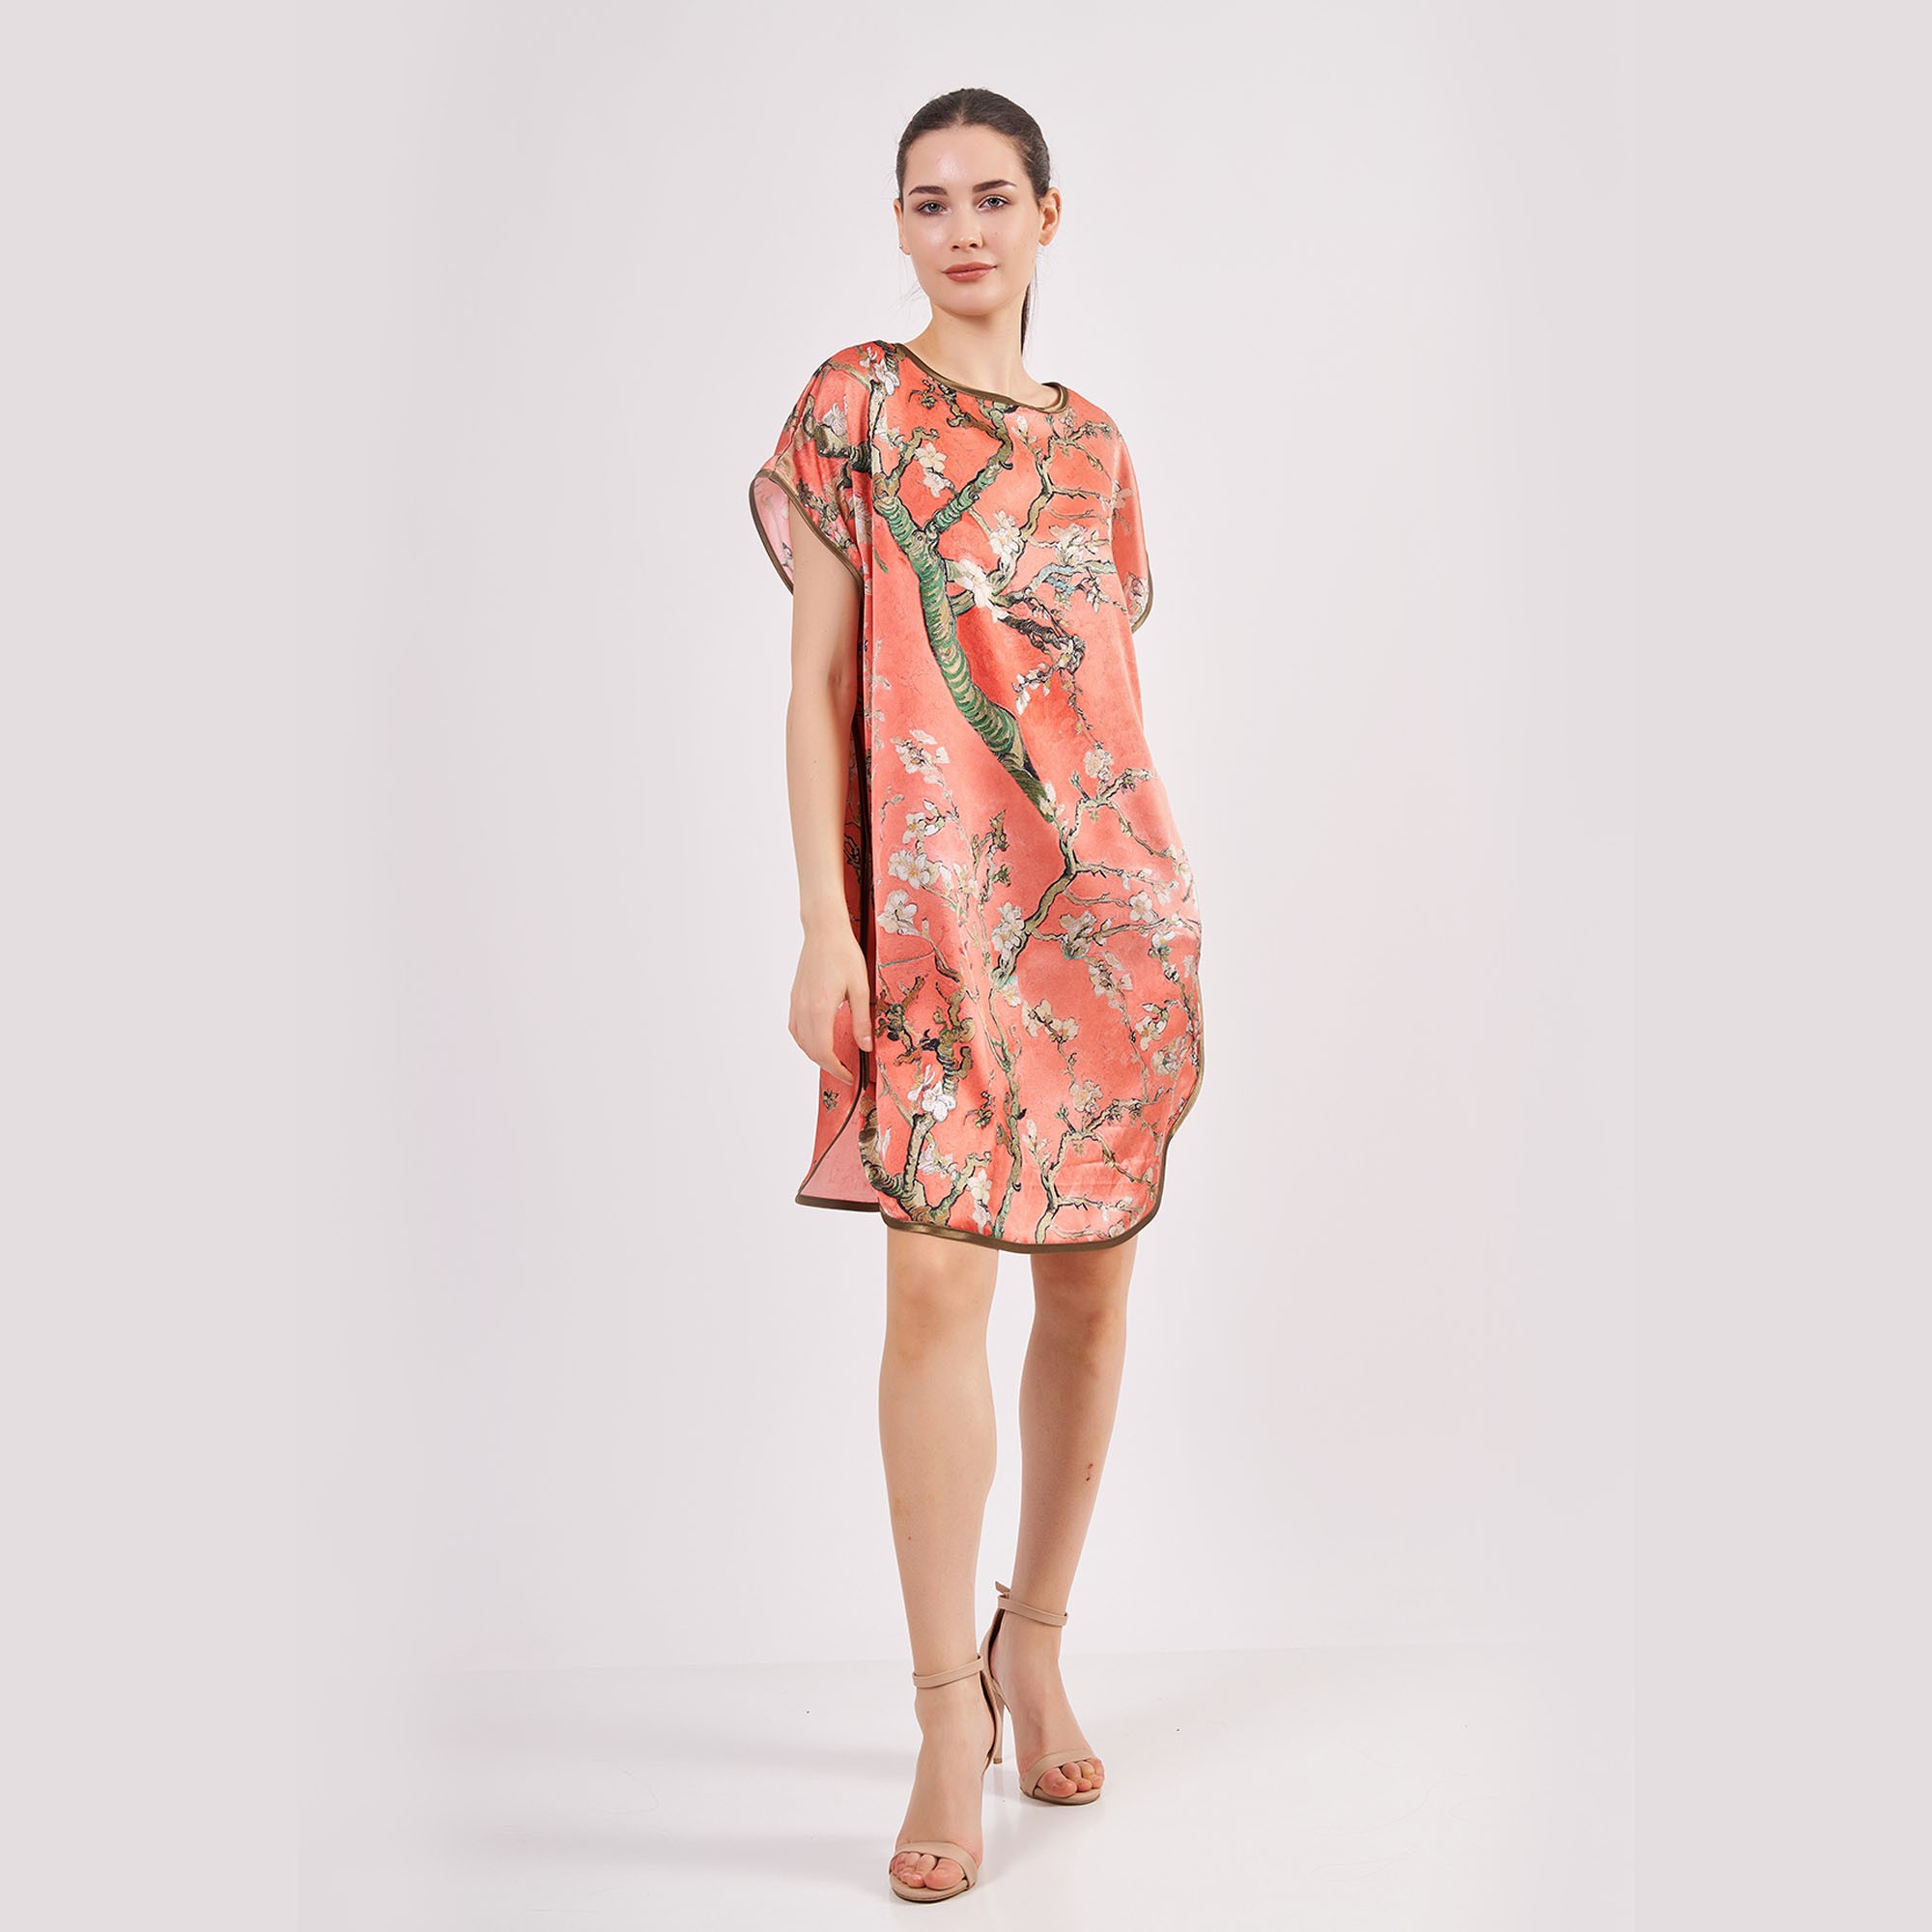 Pure Silk Plus Size Short Dress For Women | Oversized Short Kaftan Anthracite Van Gogh Almond Blossoms | Loose Fitting Dress